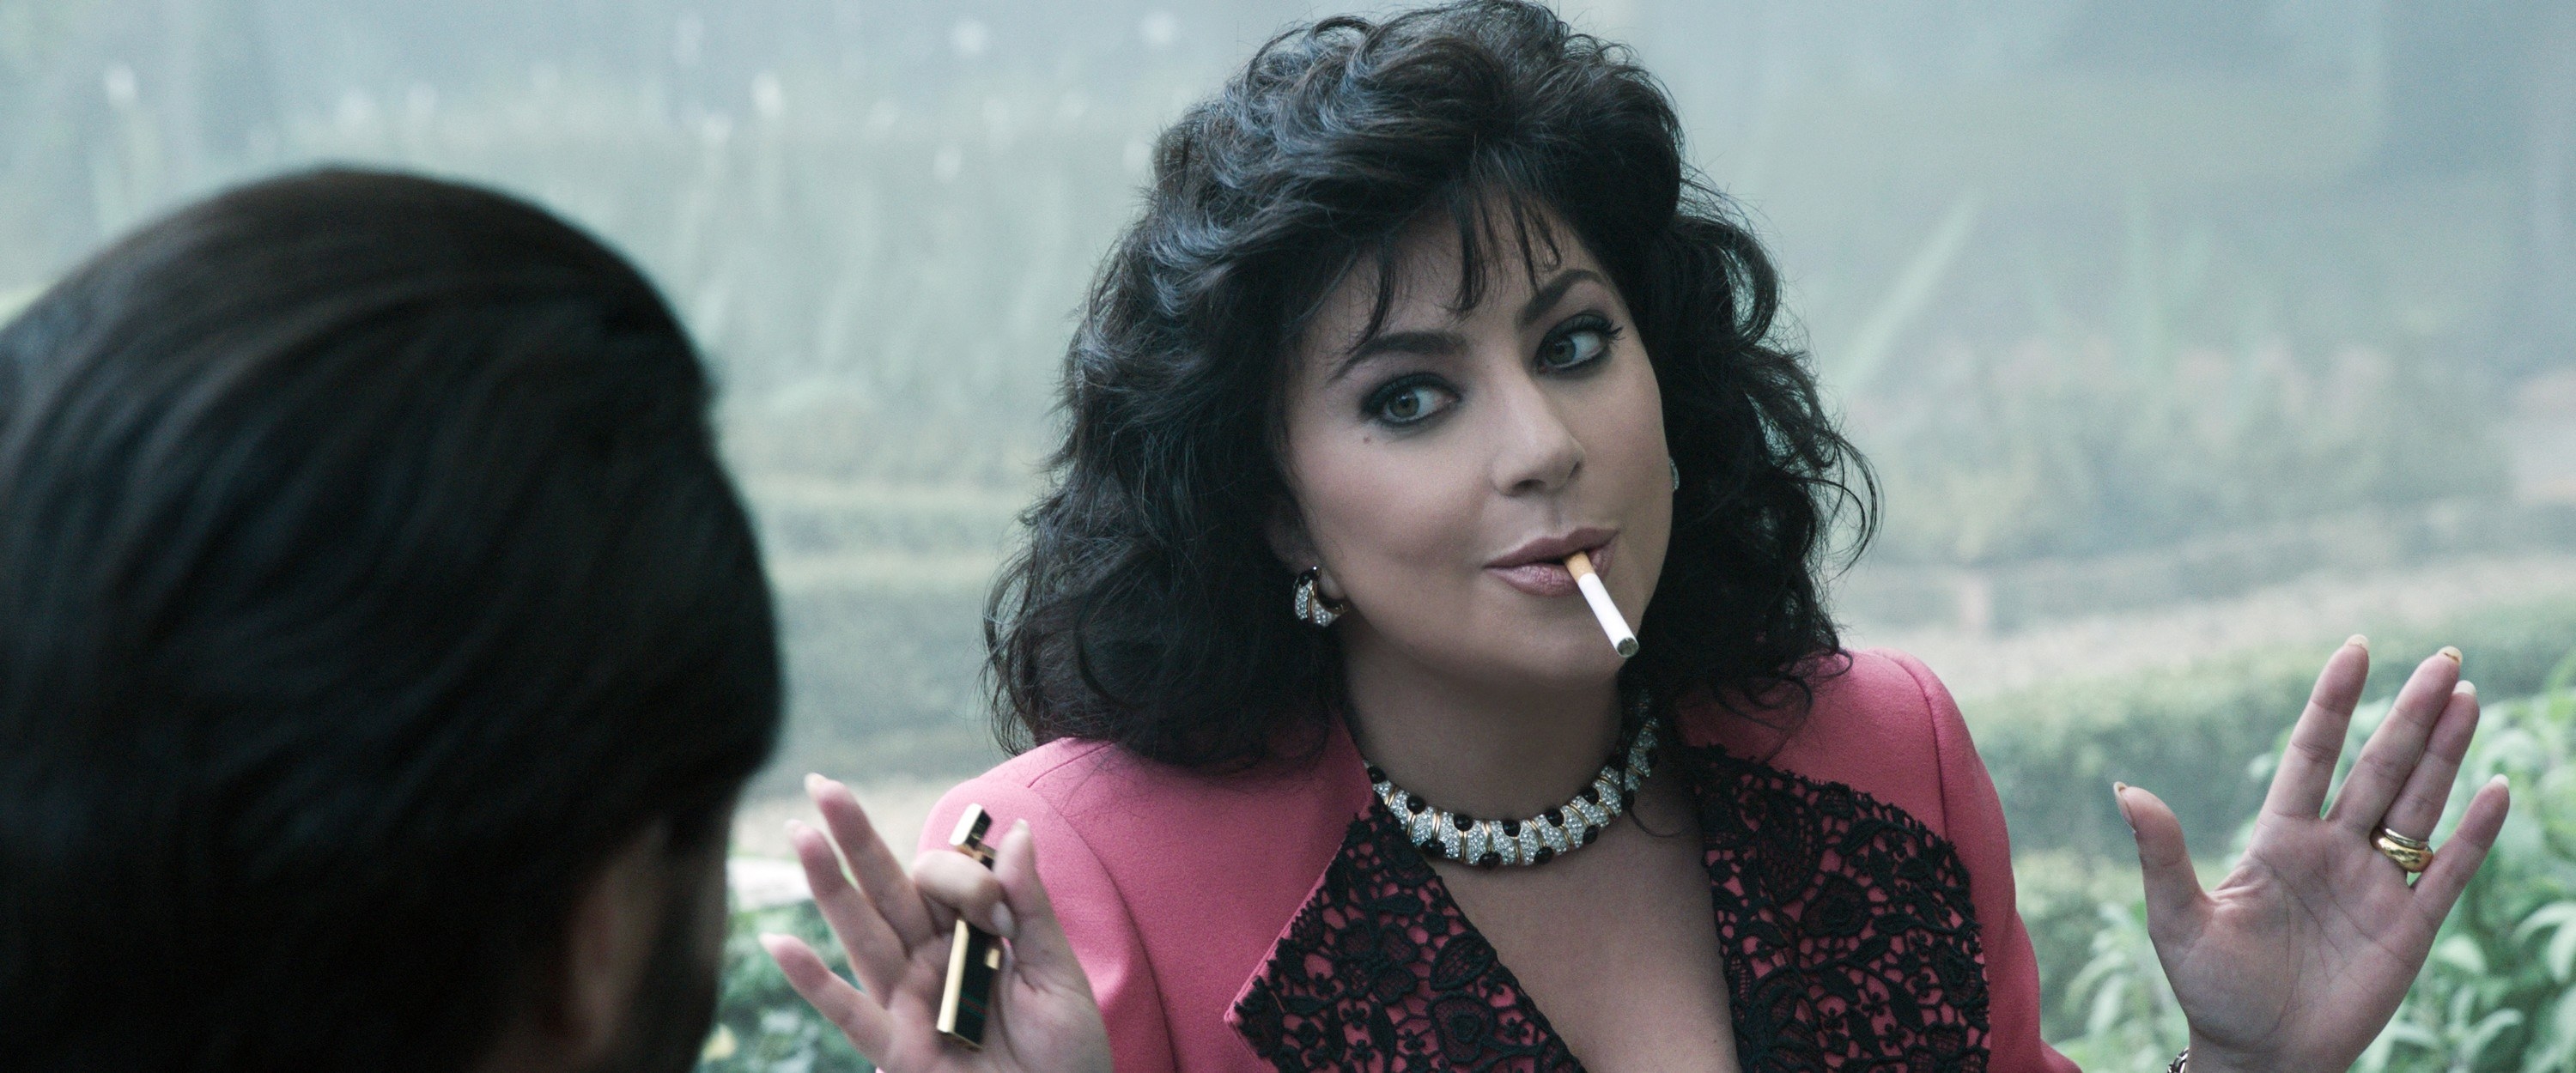 lady gaga with dark hair smoking a cigarette